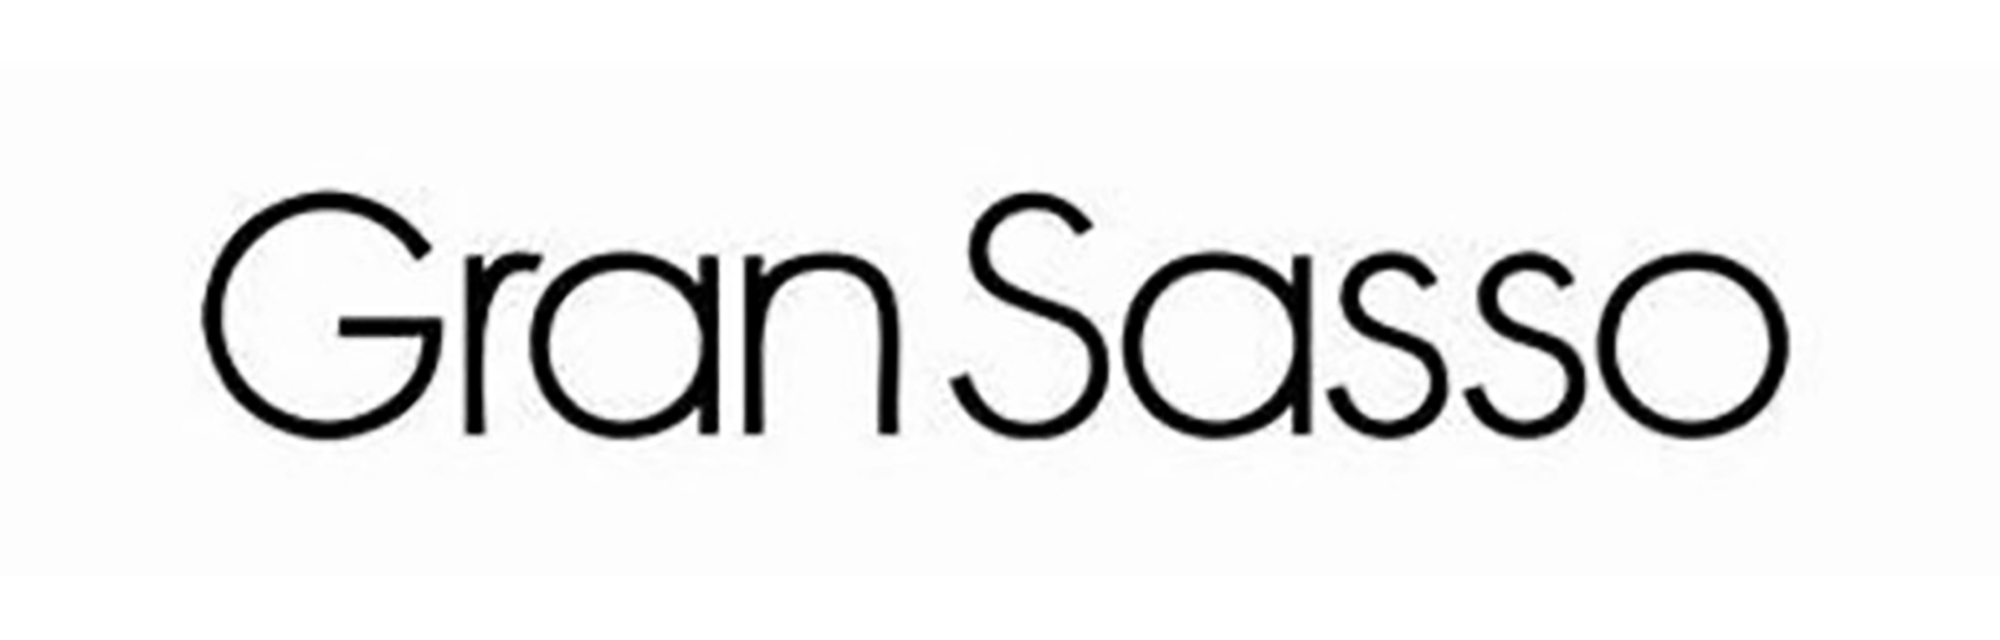 GrandSasso Logo